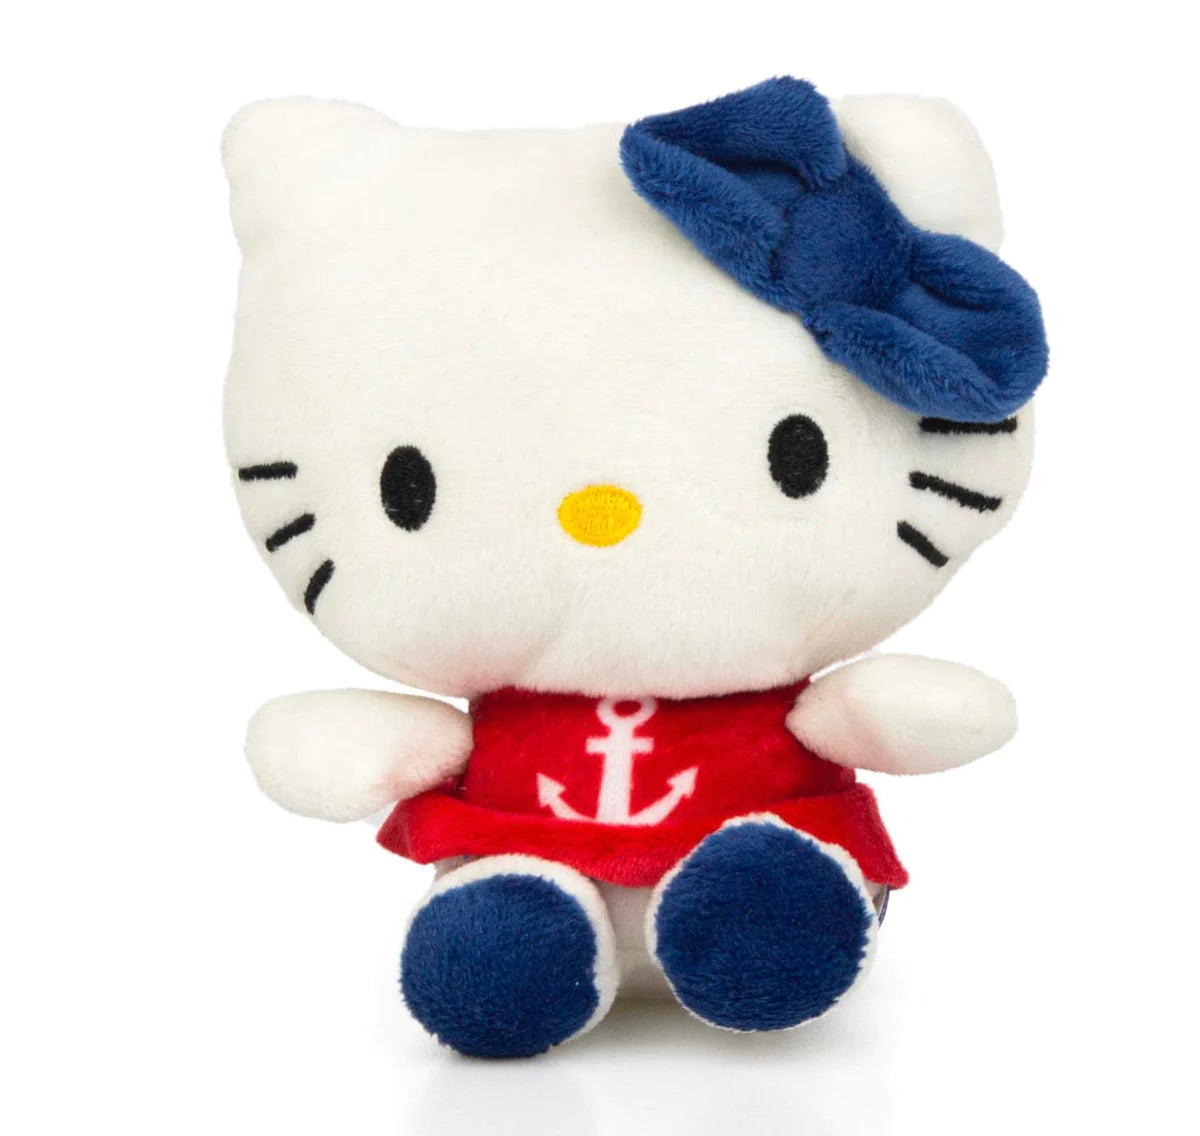 Hello Kitty Sailor Sweeties Beanbag Plush